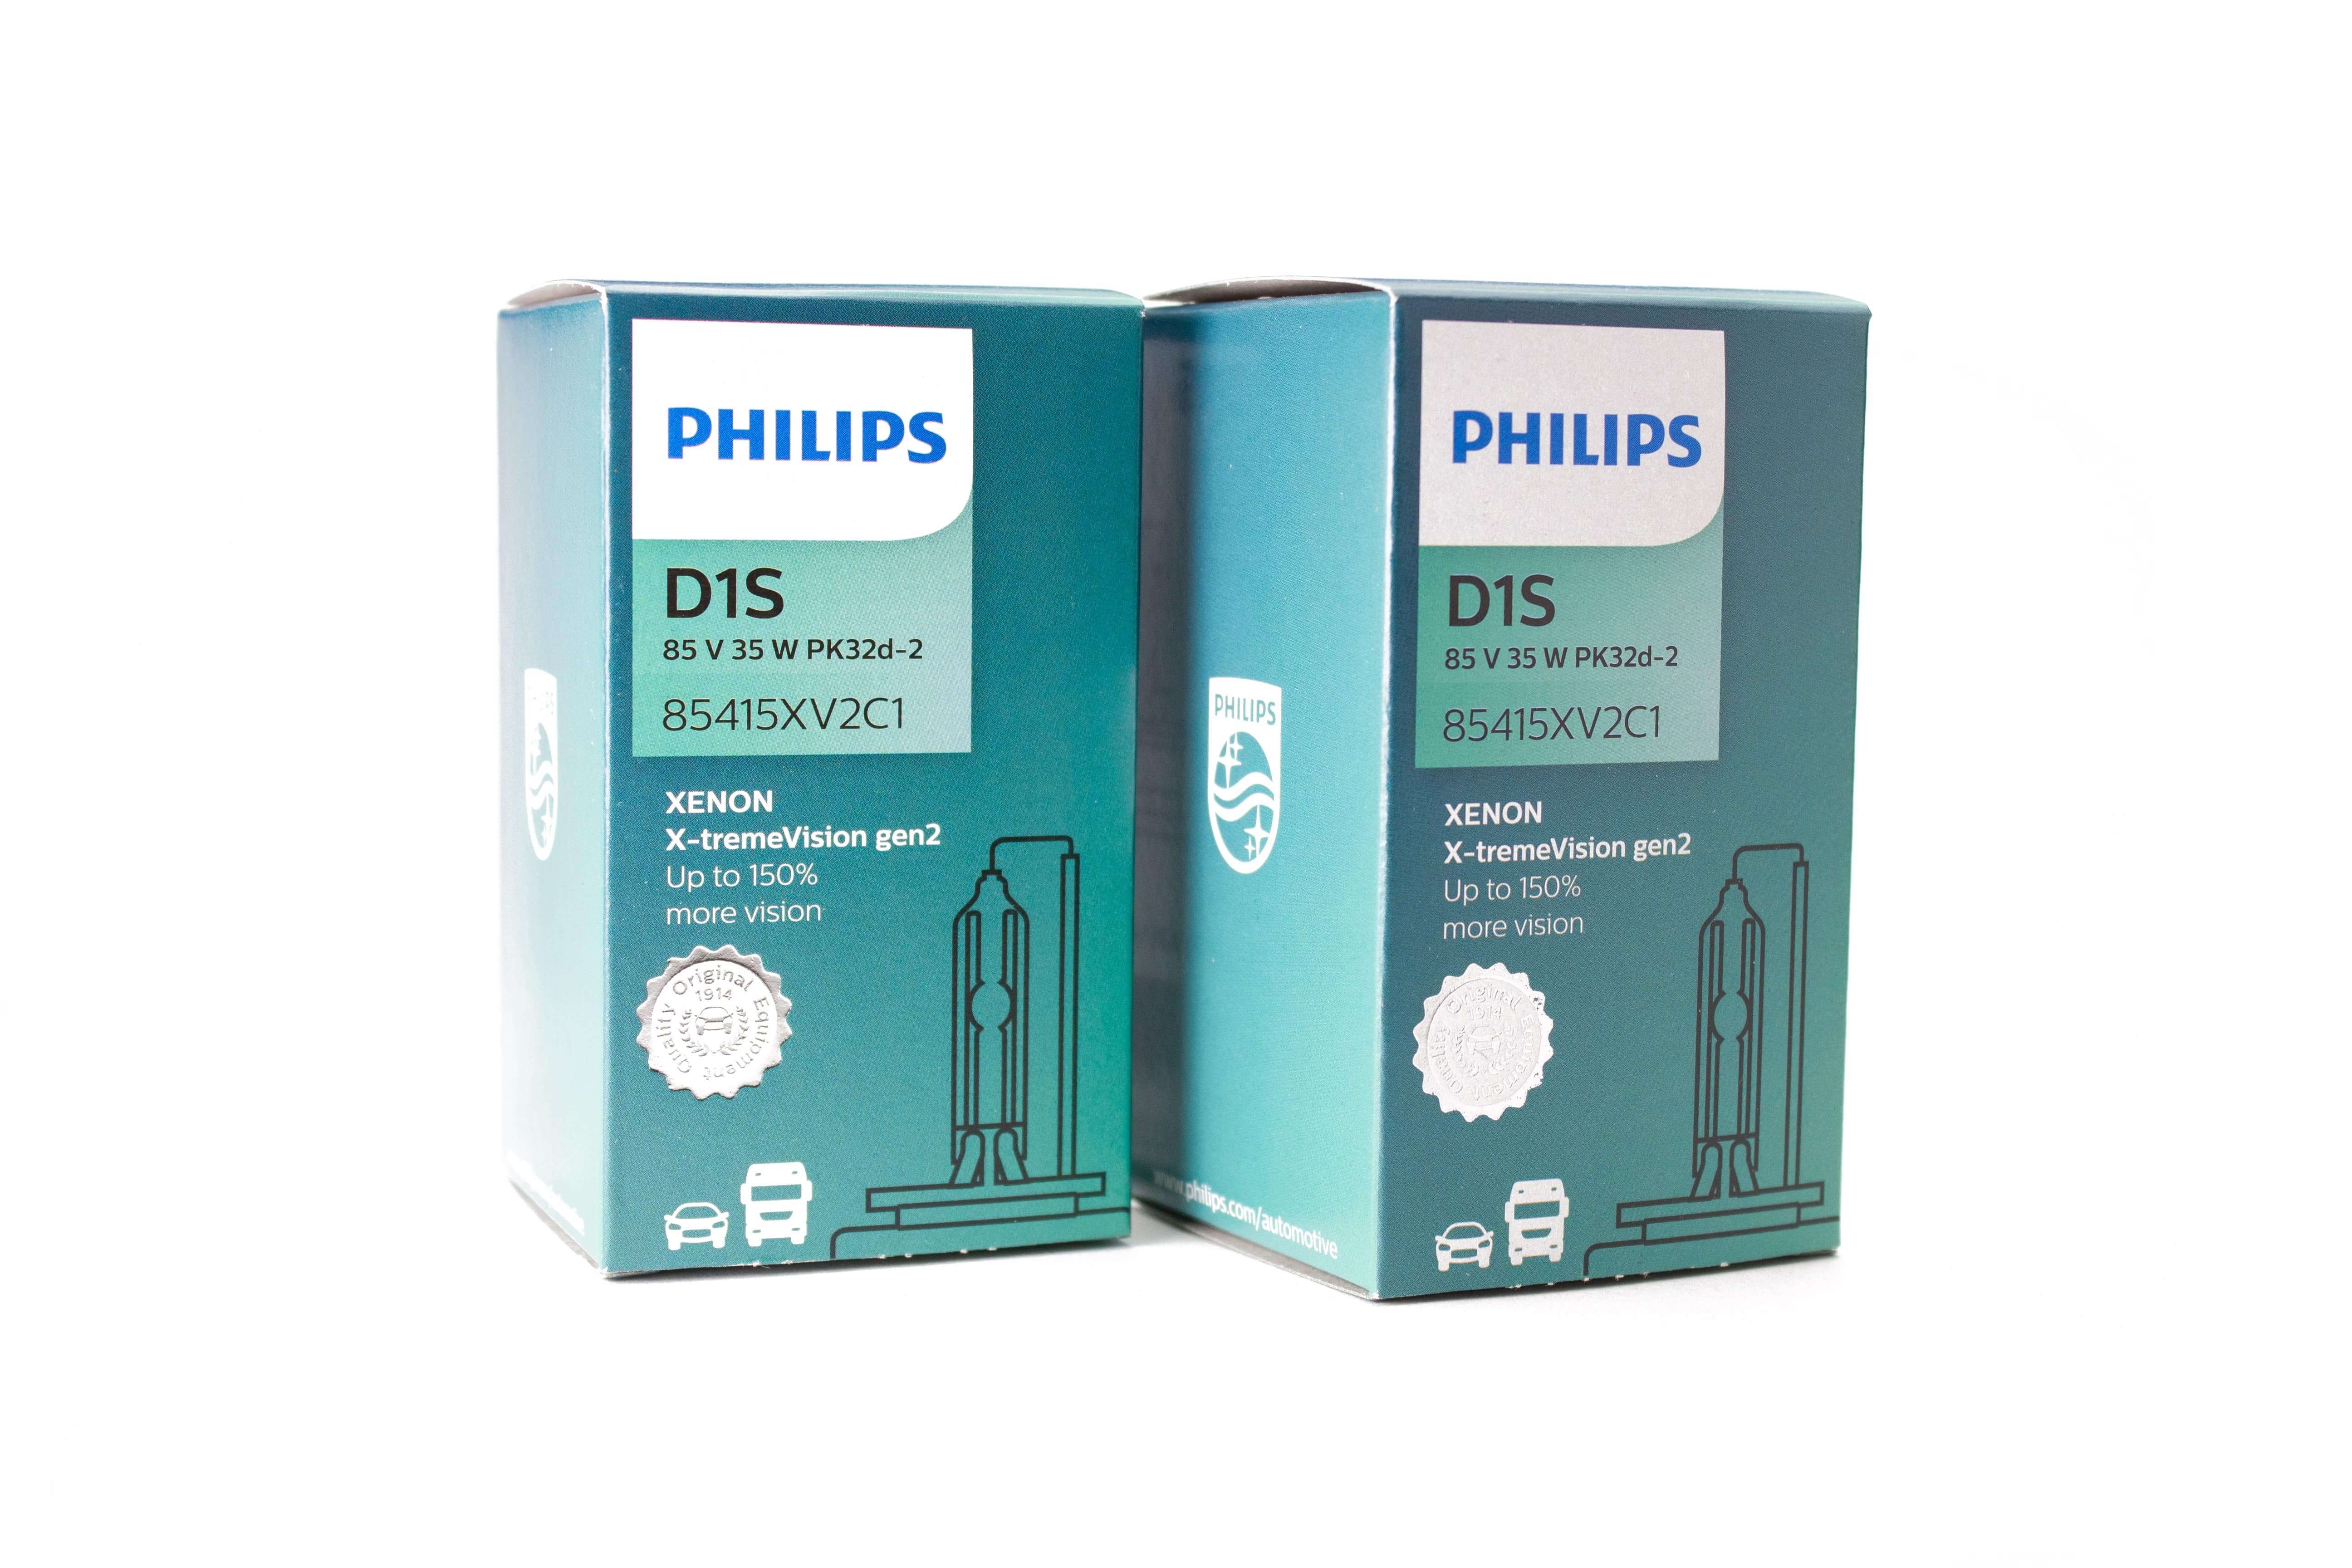 Philips Standard D1S Xenon Lamps 35W PK32d-2 • Pris »